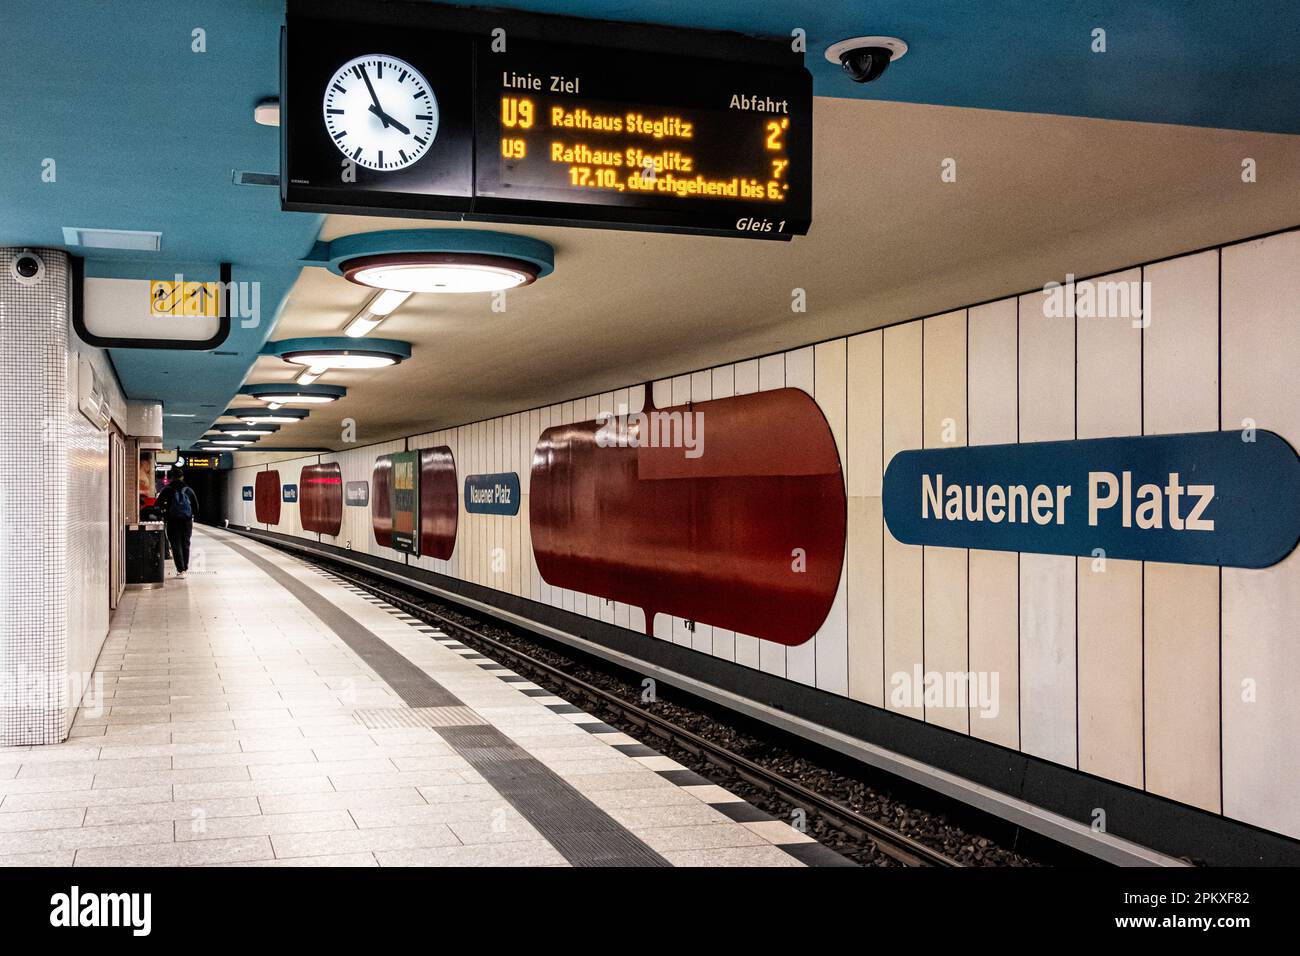 U Nauener Platz, station de métro U-bahn dessert U9 lignes, Wedding, Mitte, Berlin. Conçu par Rainer G Rümmler Banque D'Images